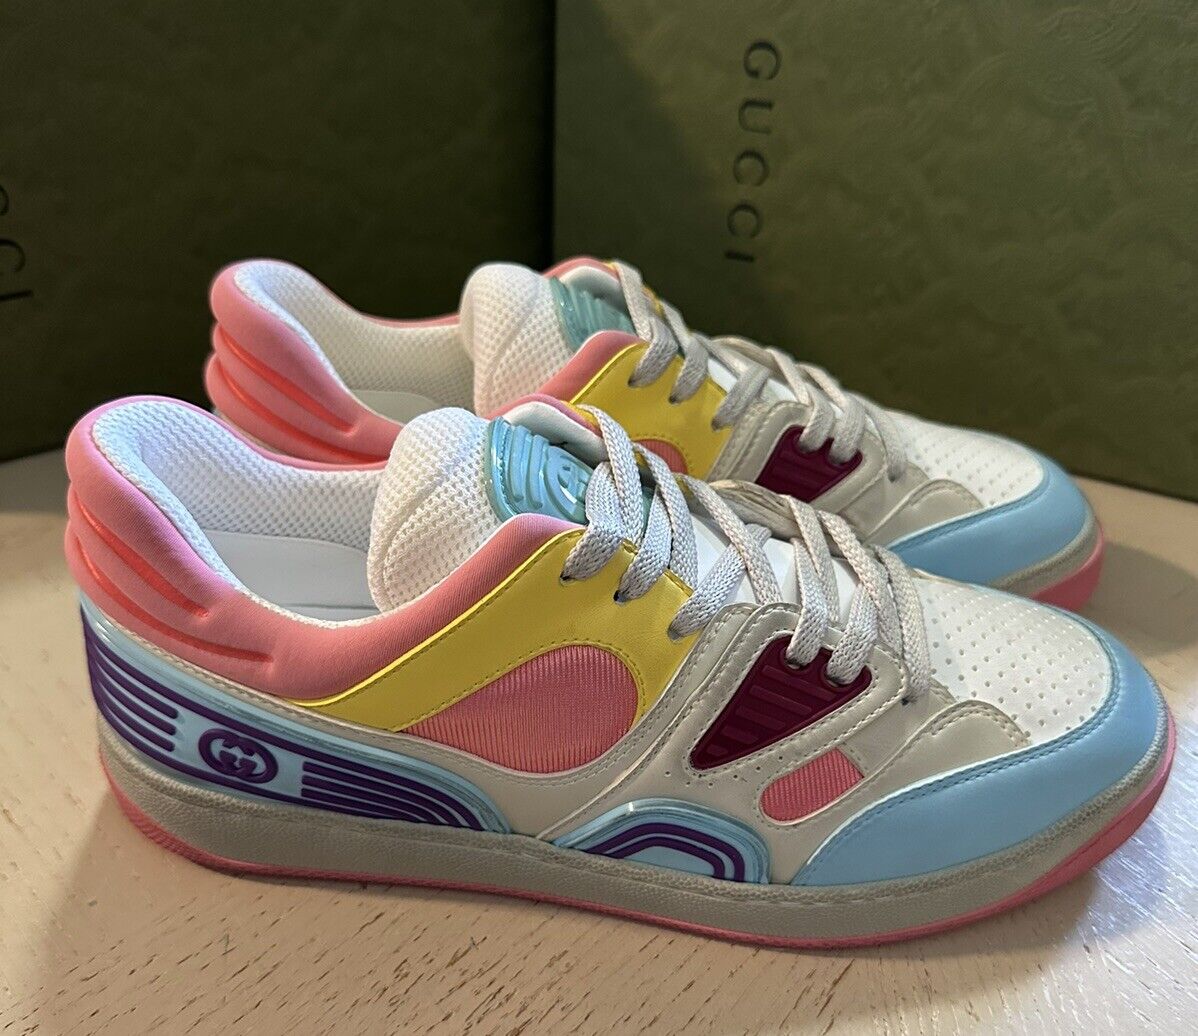 New $950 Gucci Women Demetra Basket Sneakers Pink/Blue/Multi 9 US/39 Eu 700291